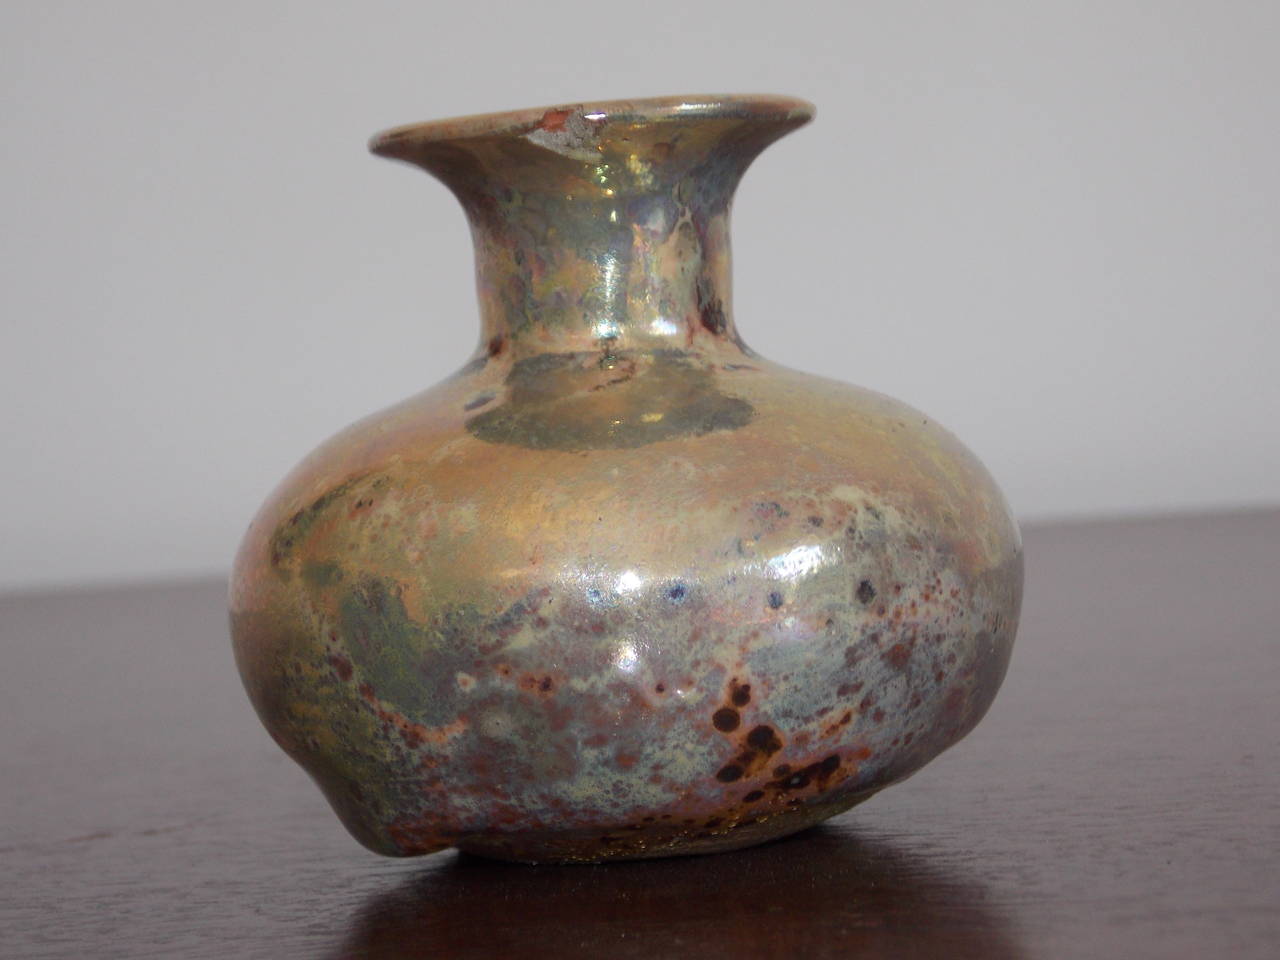 American Beatrice Wood Studio Pottery Weed Vase with Iridescent Glaze 